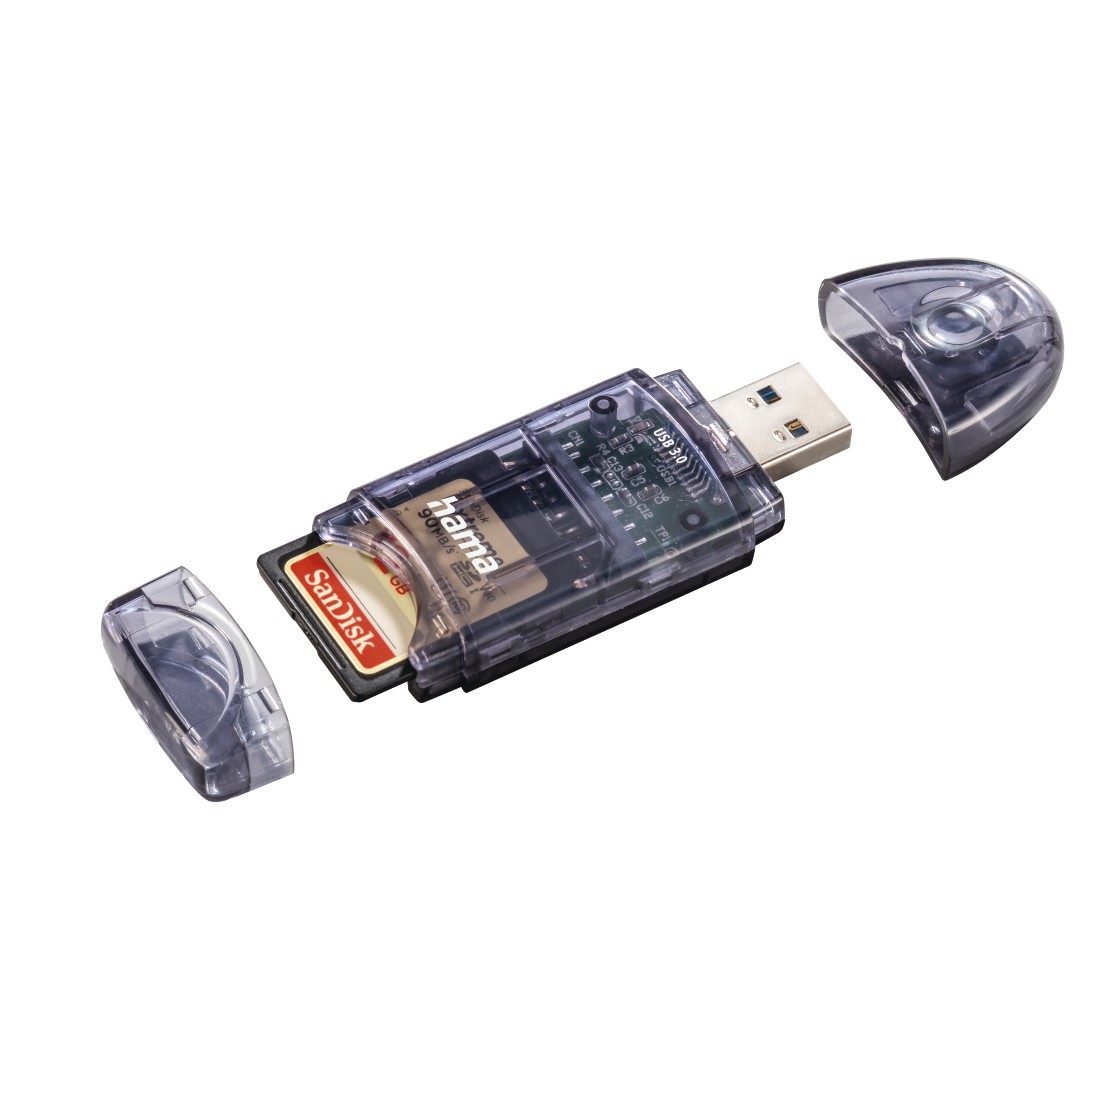 00124194 Hama USB 3.0 Card Reader, SD/micro SD, anthracite